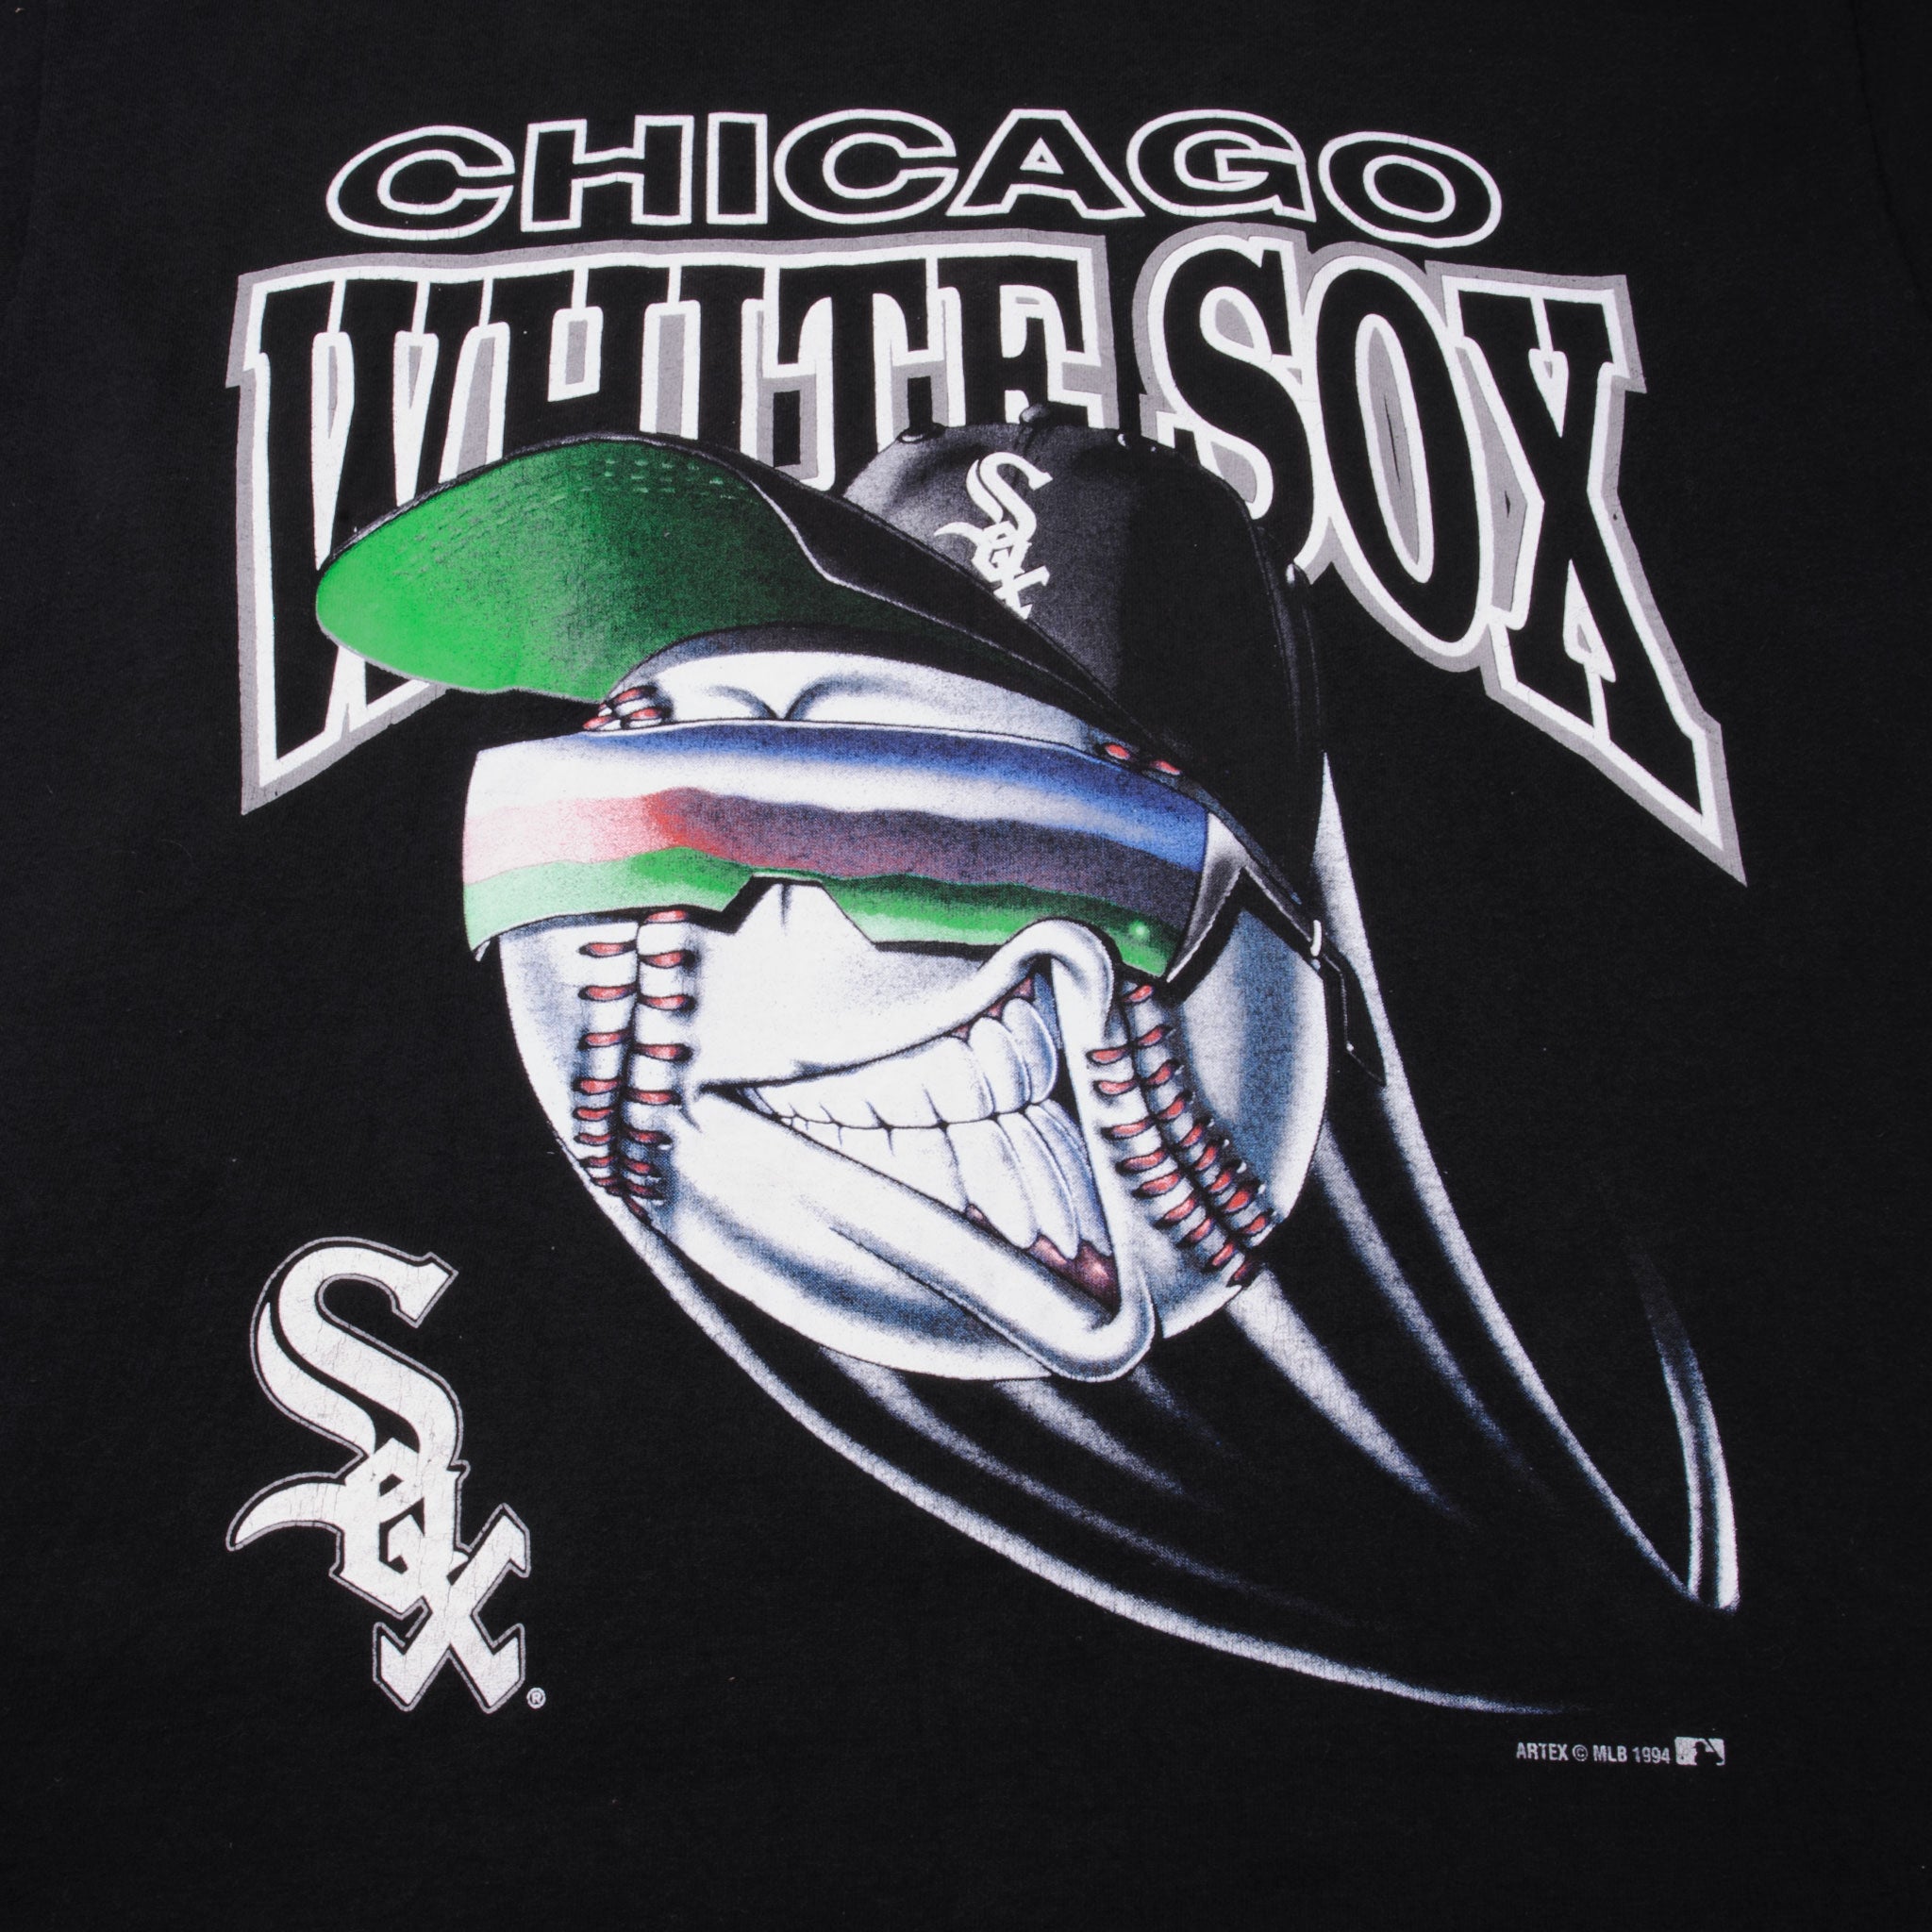 VINTAGE MLB CHICAGO WHITE SOX TEE SHIRT 1994 XL MADE USA